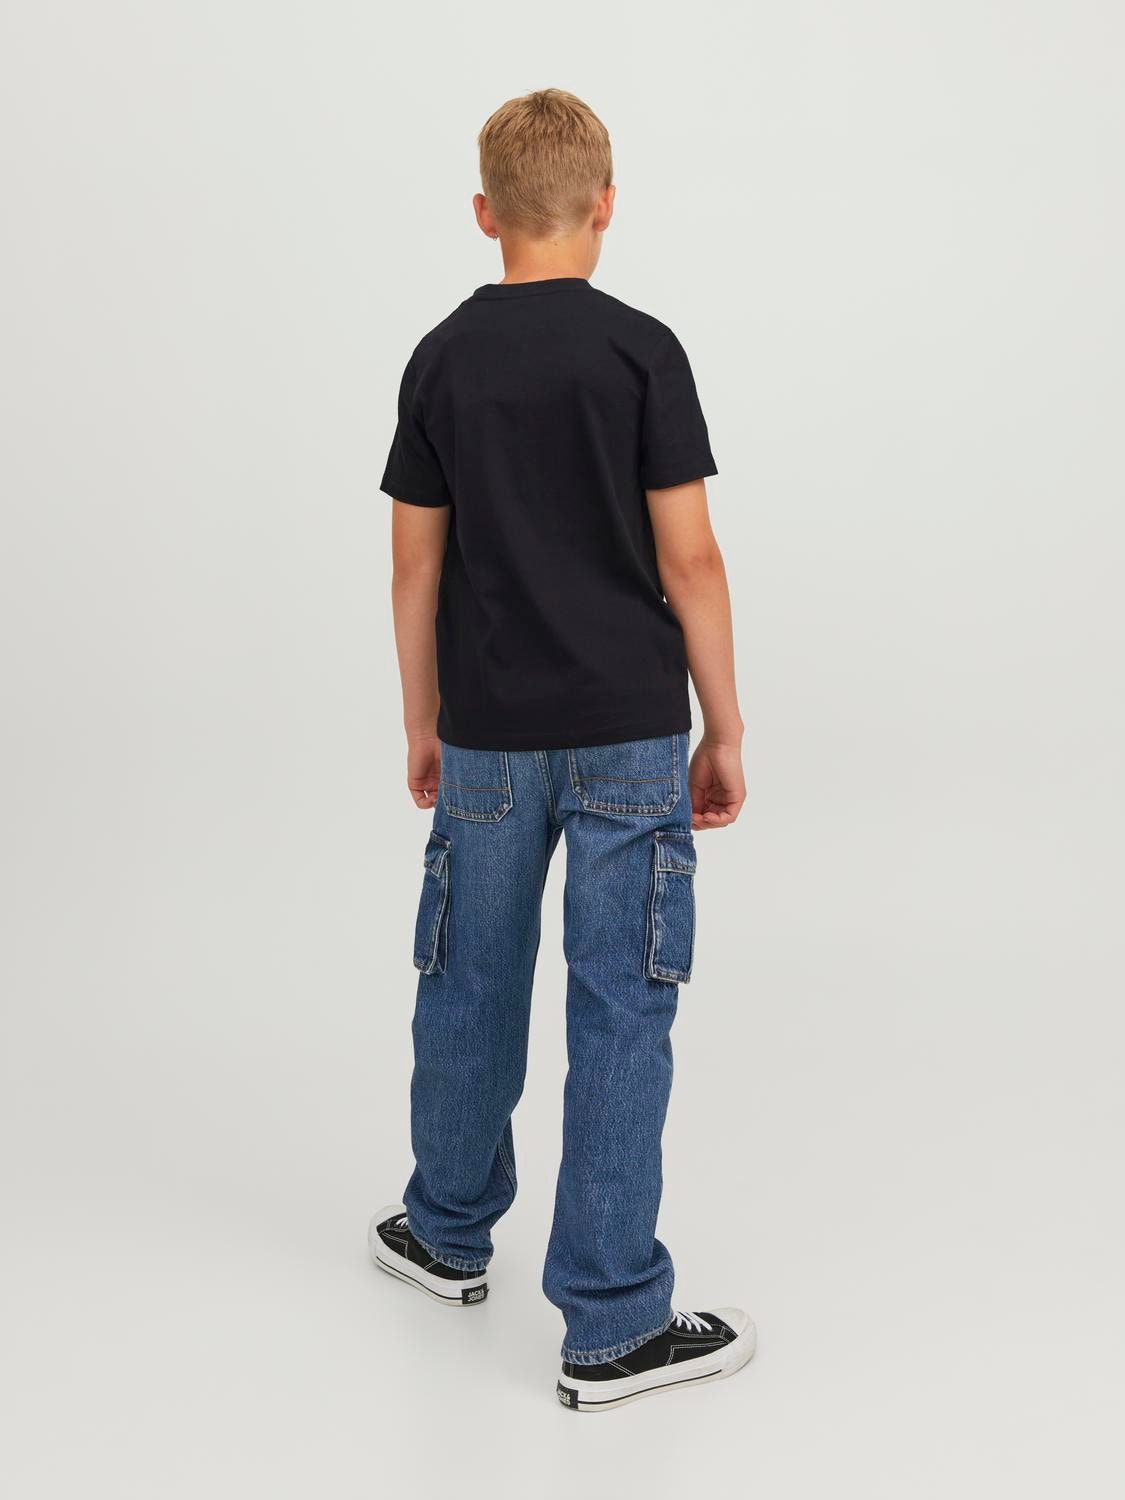 Jack & Jones T-shirt Estampado de foto Para meninos -Black - 12242845